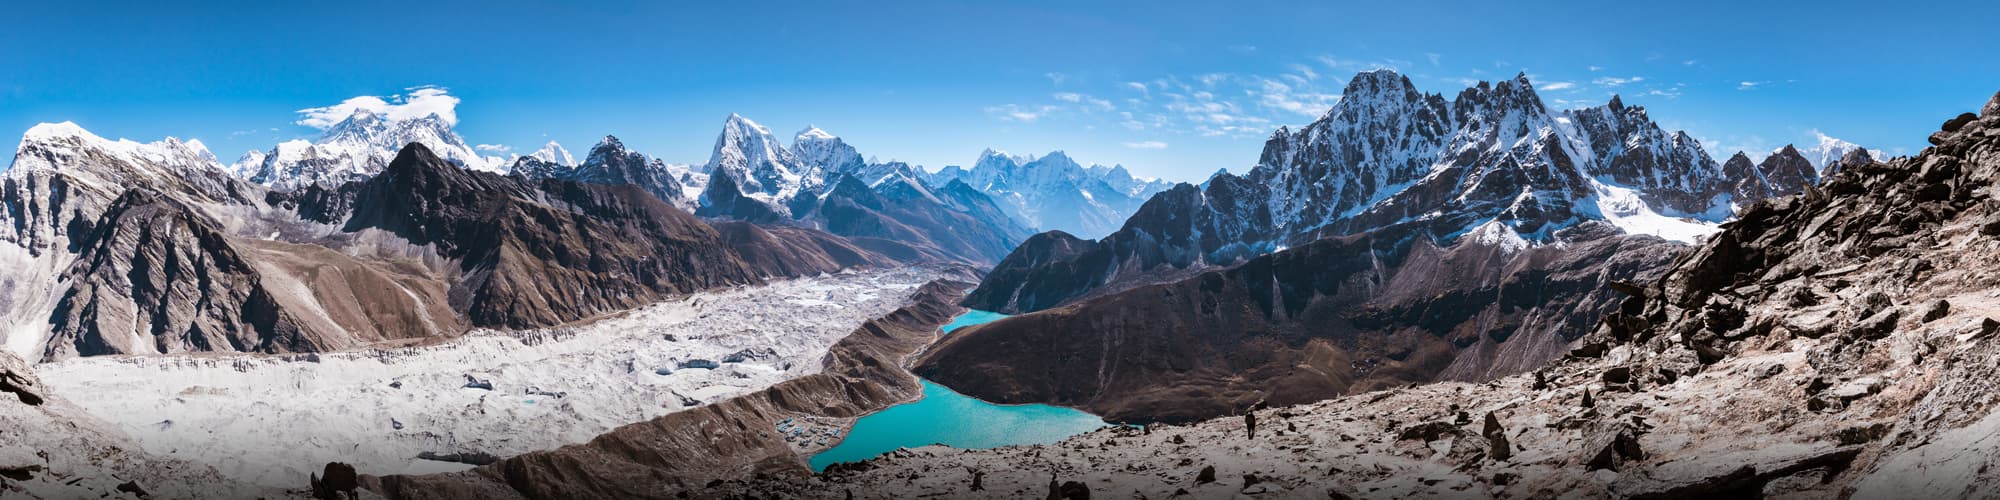 Ascension et alpinisme Népal © Rmnunes / iStock